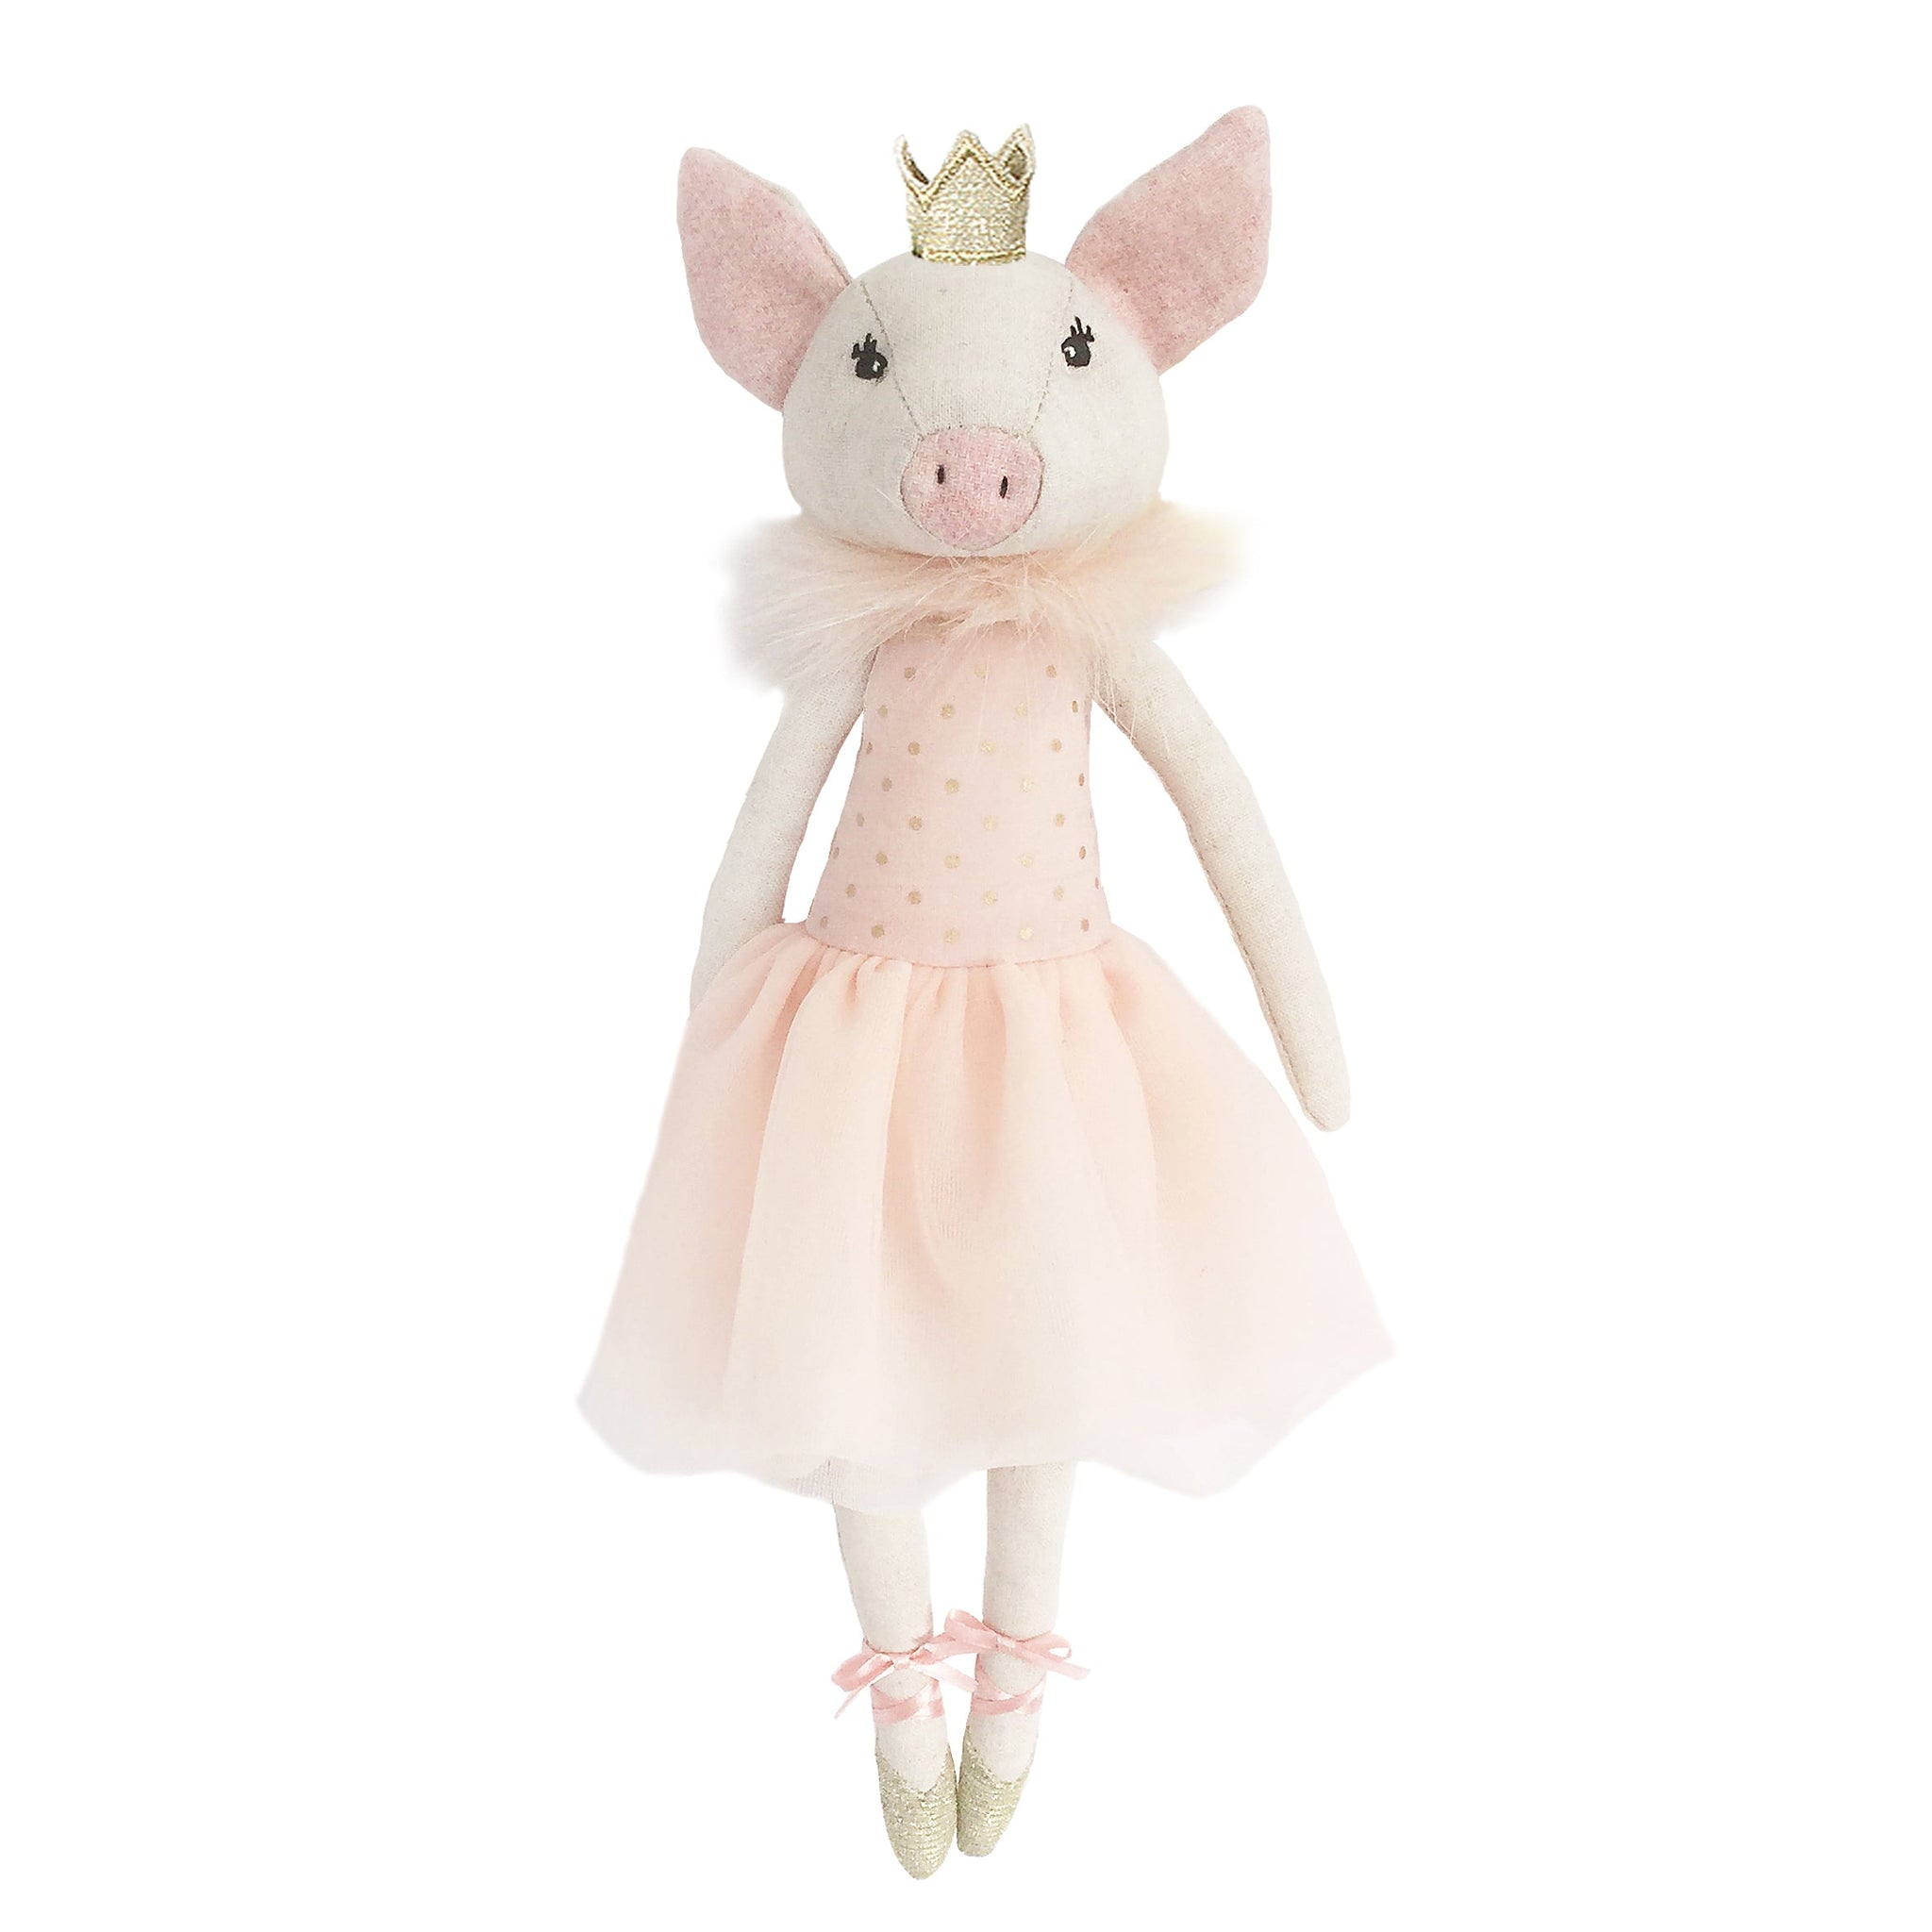 ‘Penelope' Pig Ballerina Doll - HoneyBug 